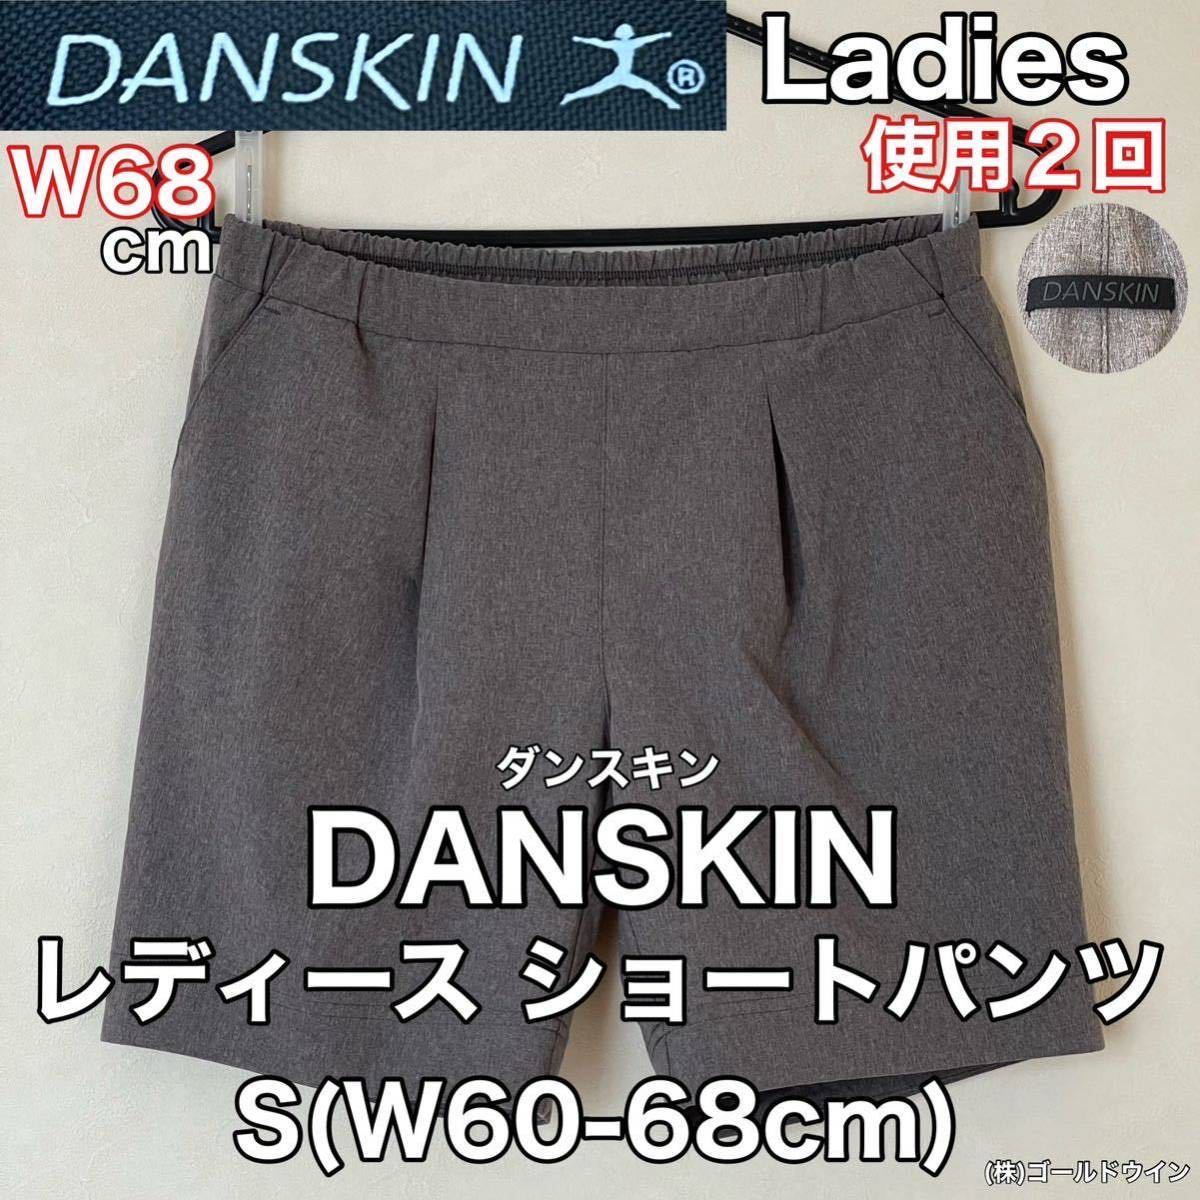 Super Beautiful Goods Danskin (Dancekin) Ladies Short Pants S (W60-68см) Используется 2 раза Sery Sports Outdoor Half Co., Ltd.